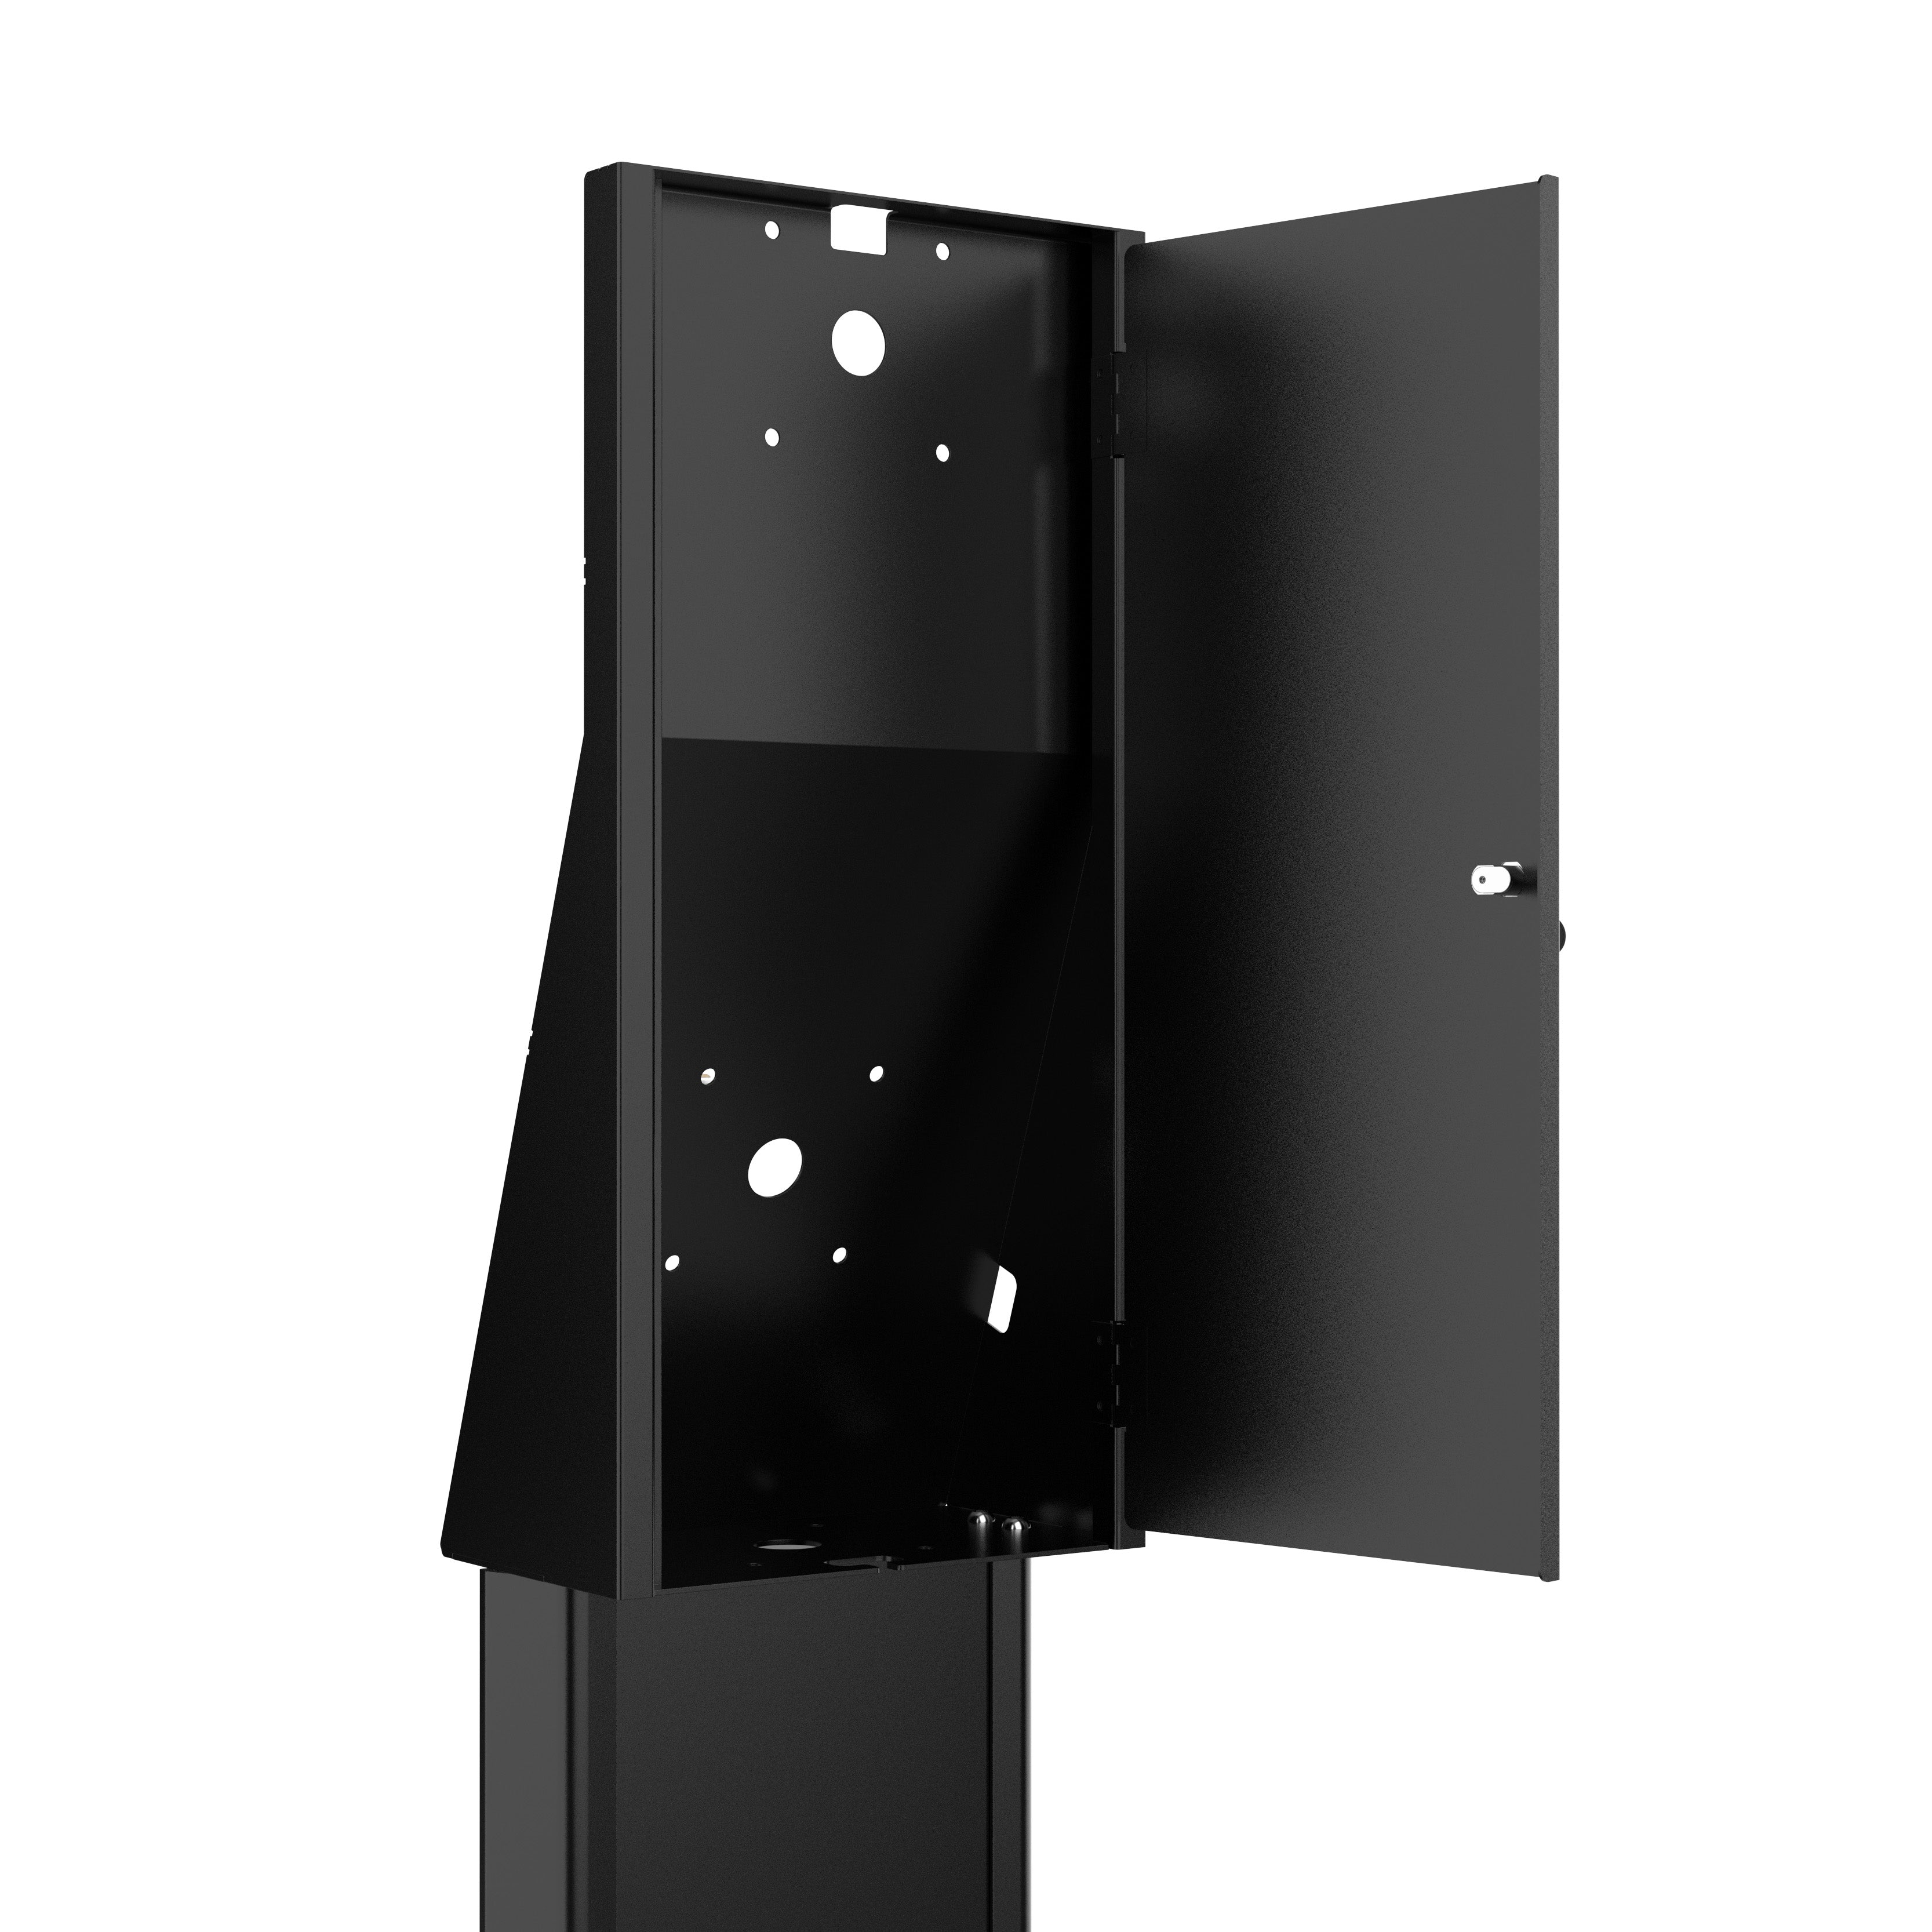 Dual Universal Security Enclosure Desk Mount w/ Storage Compartment (Black)